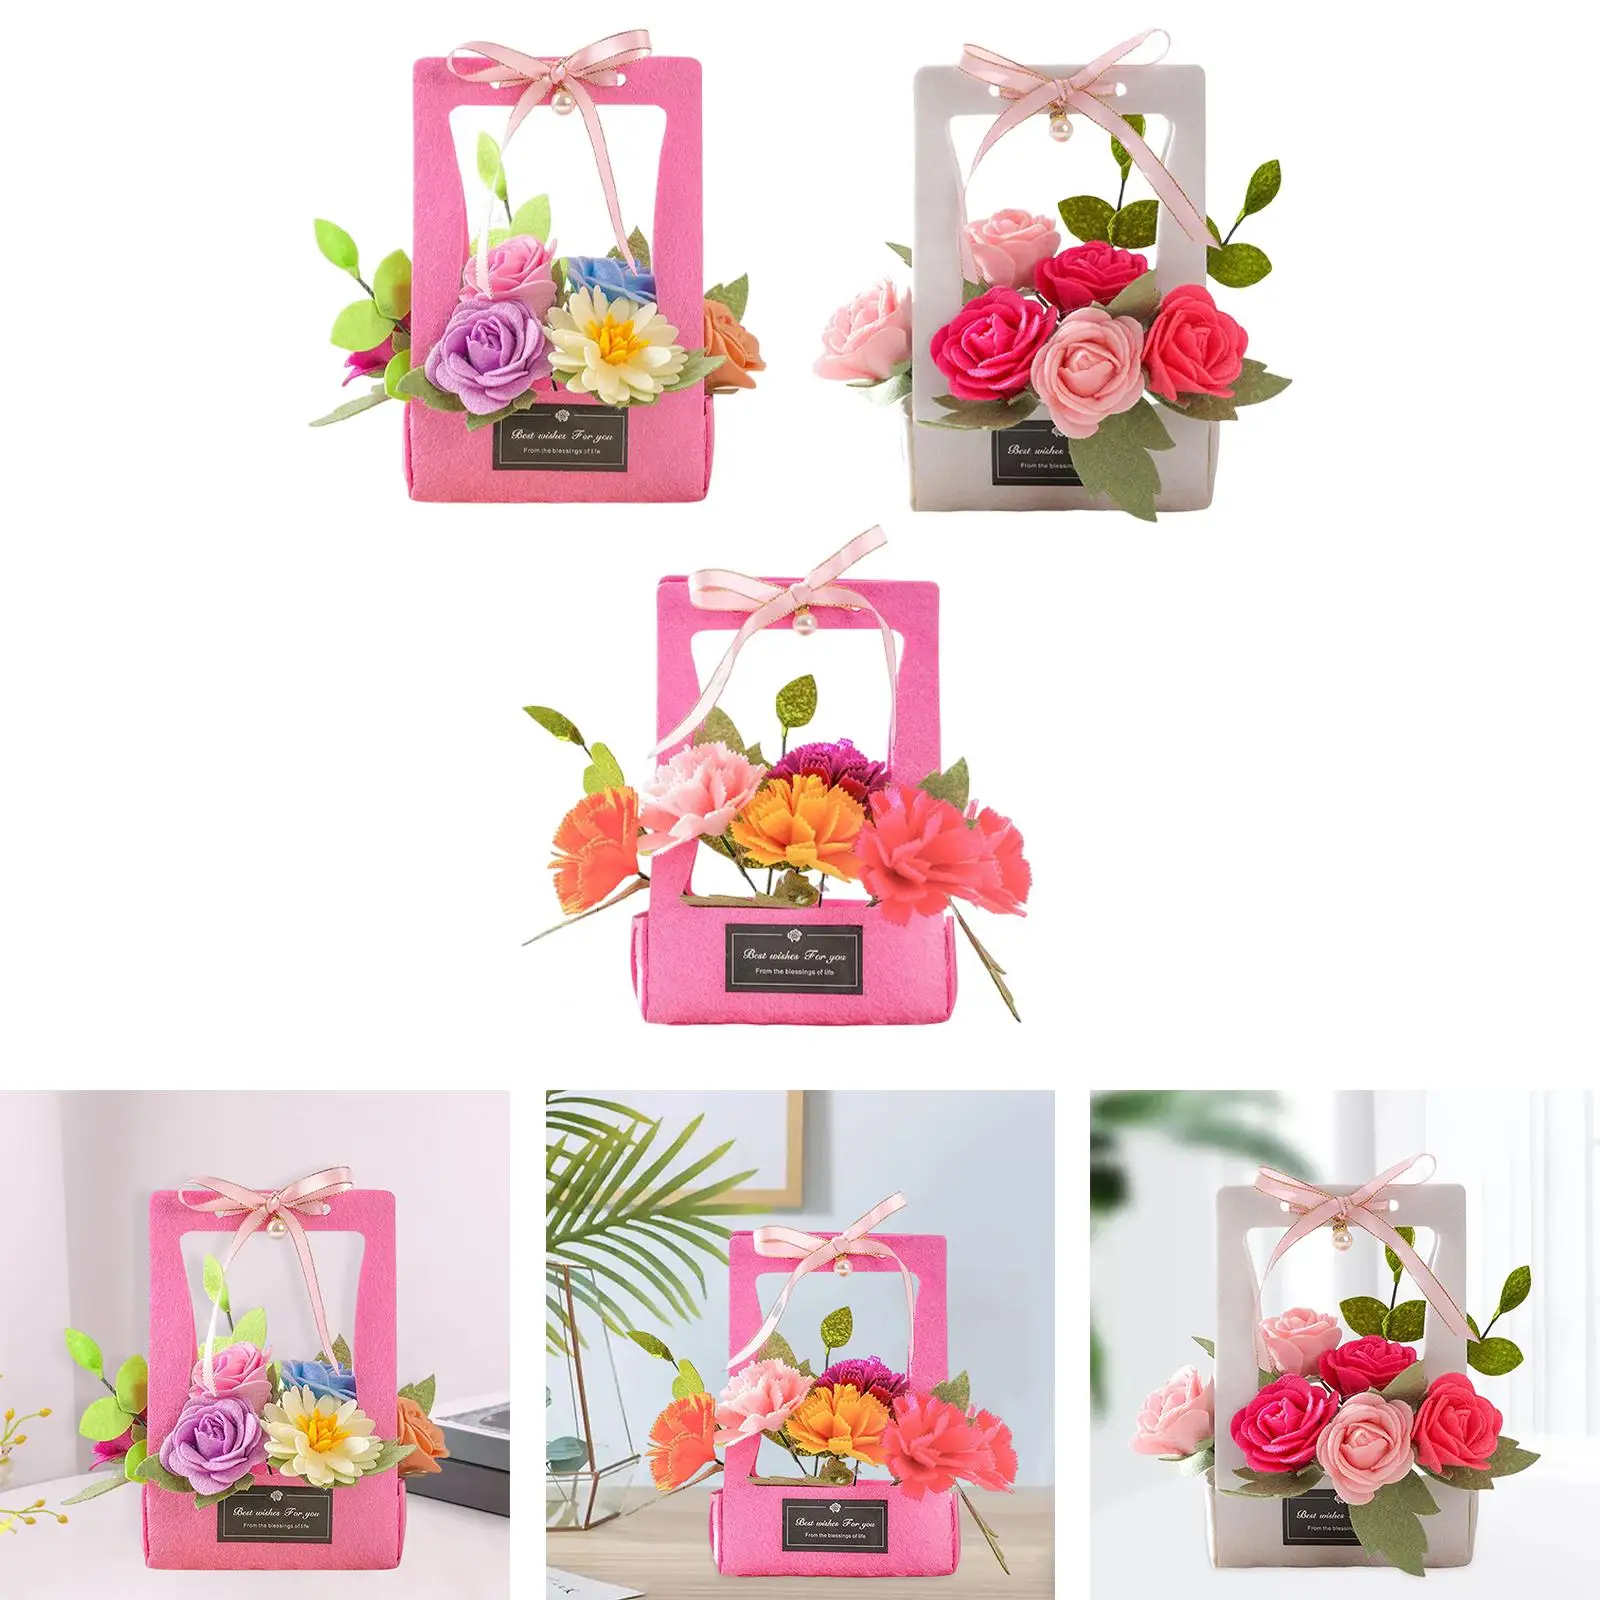 3D DIY Felt Flower Basket Craft Kit Kids Toy Mothers Day Gift Floral Handmade for Boys Girls Halloween Home Birthday Decor